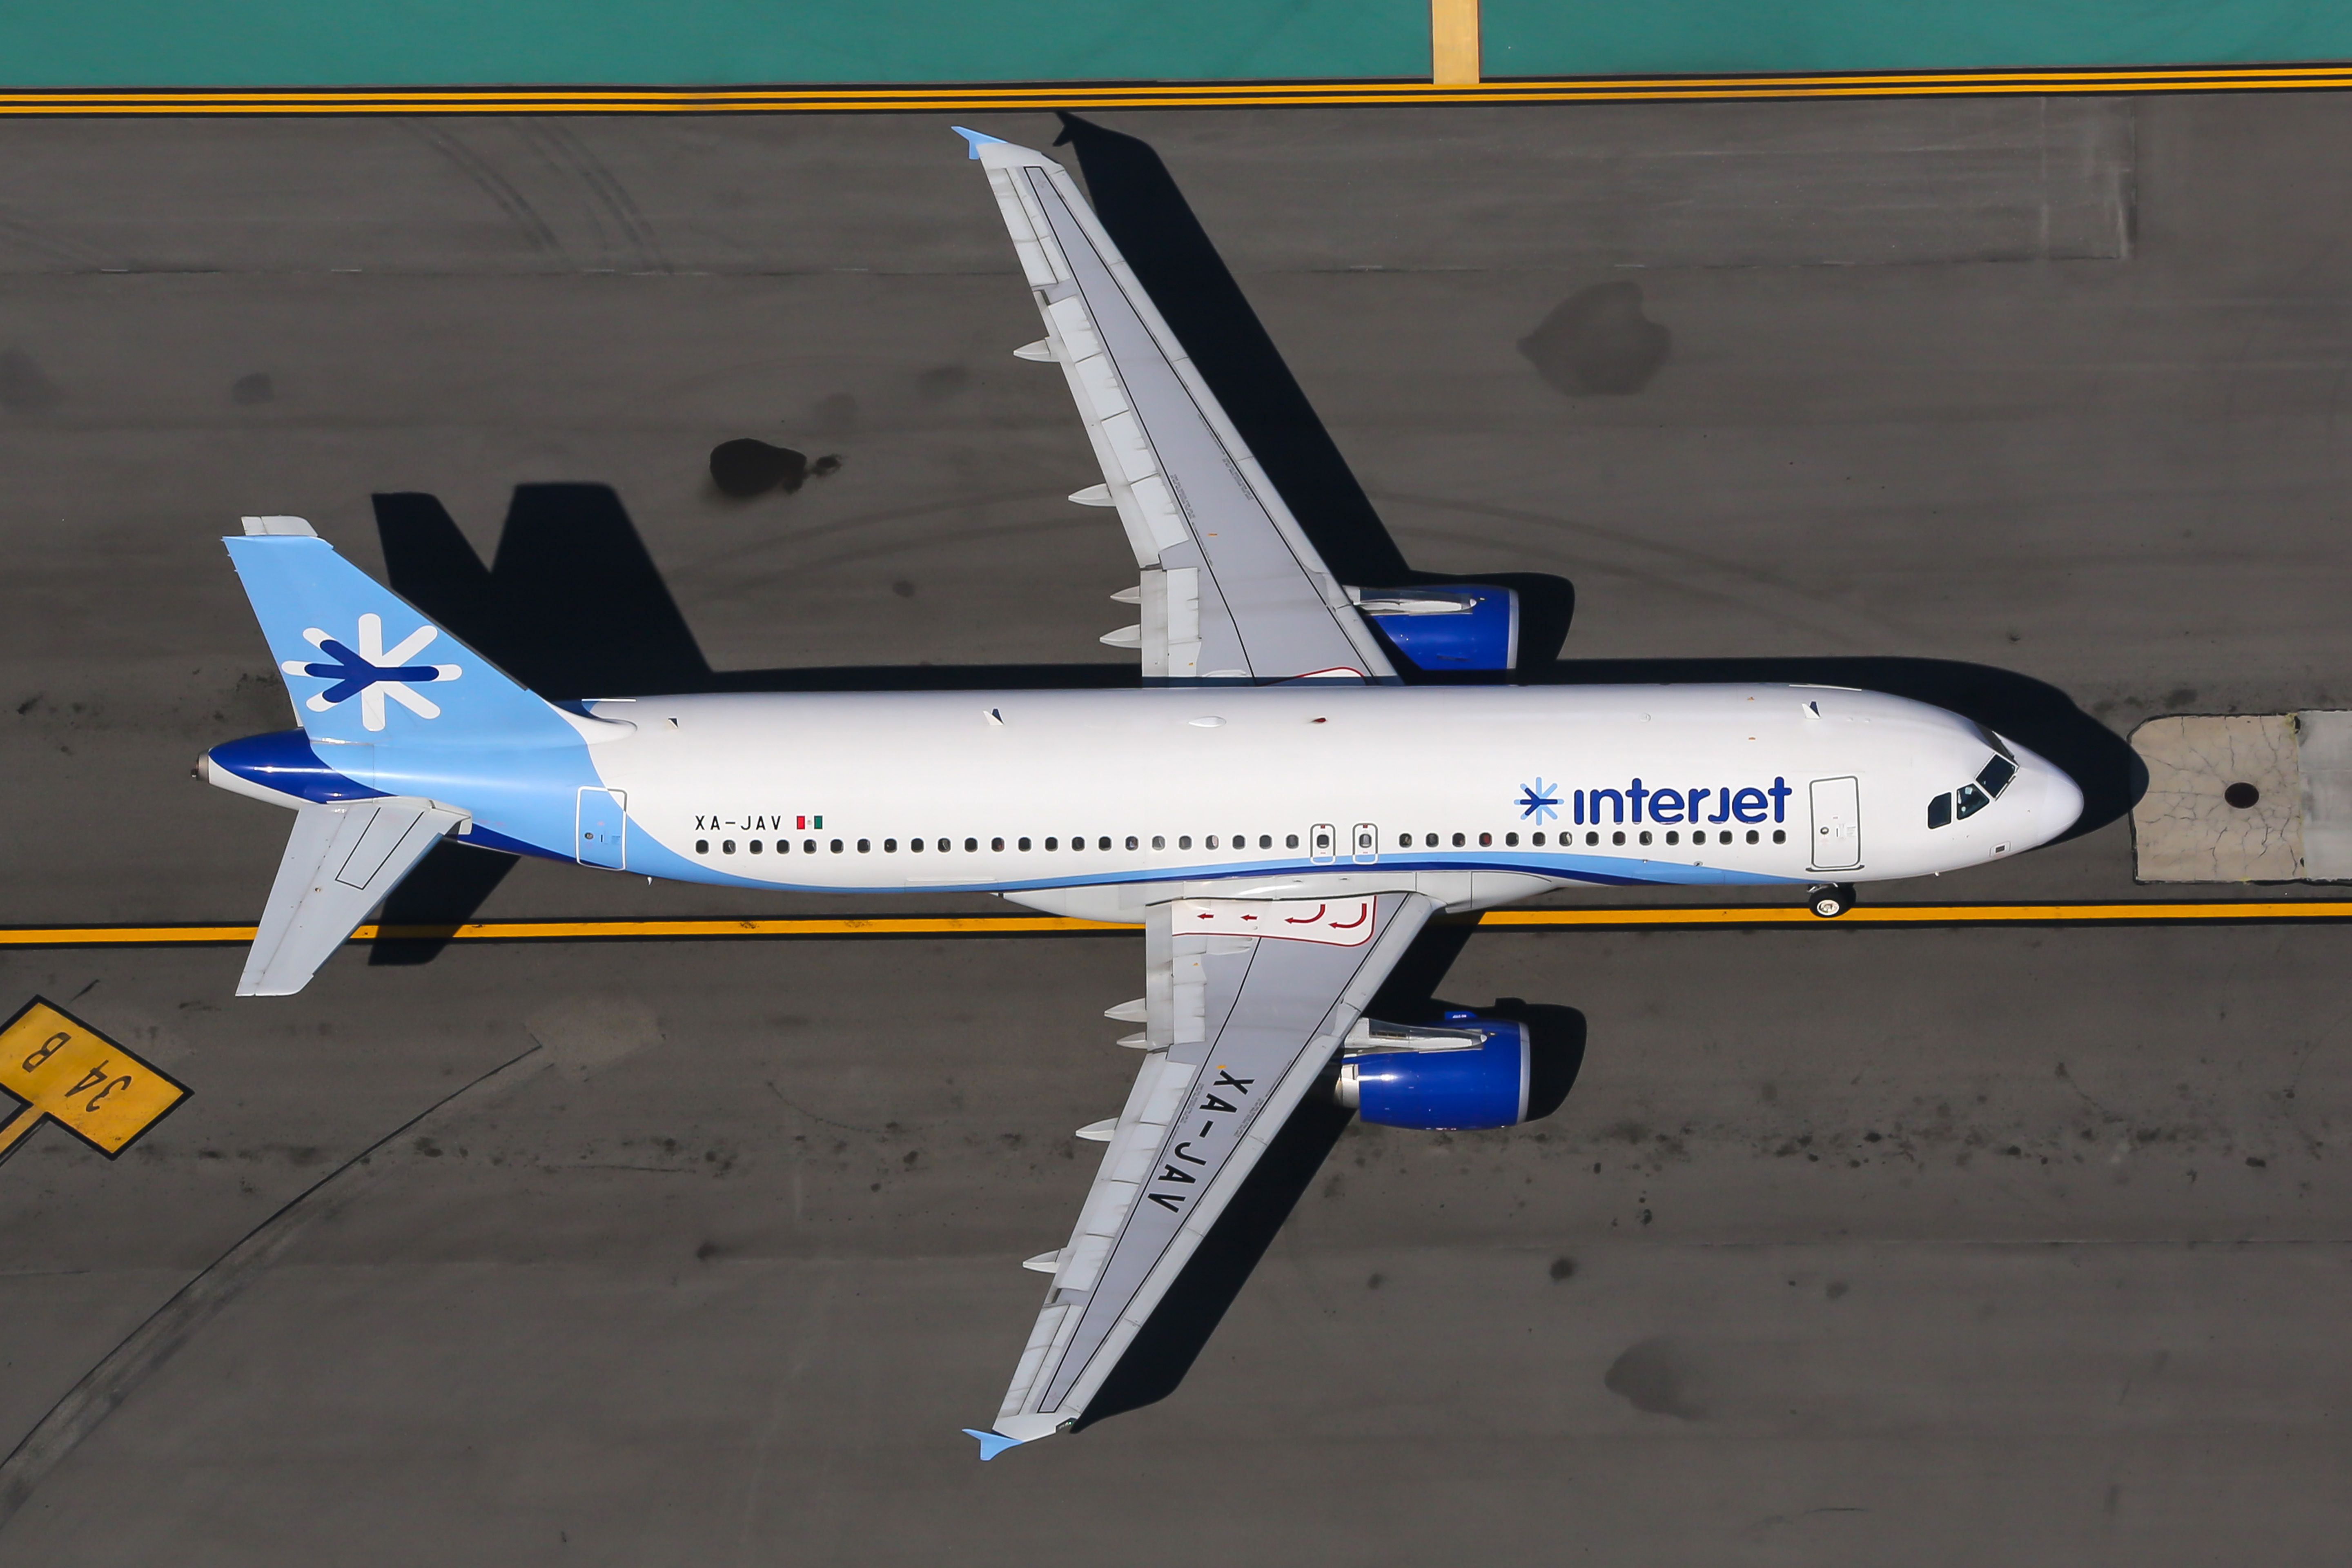 An Interjet Airbus A320 aircraft